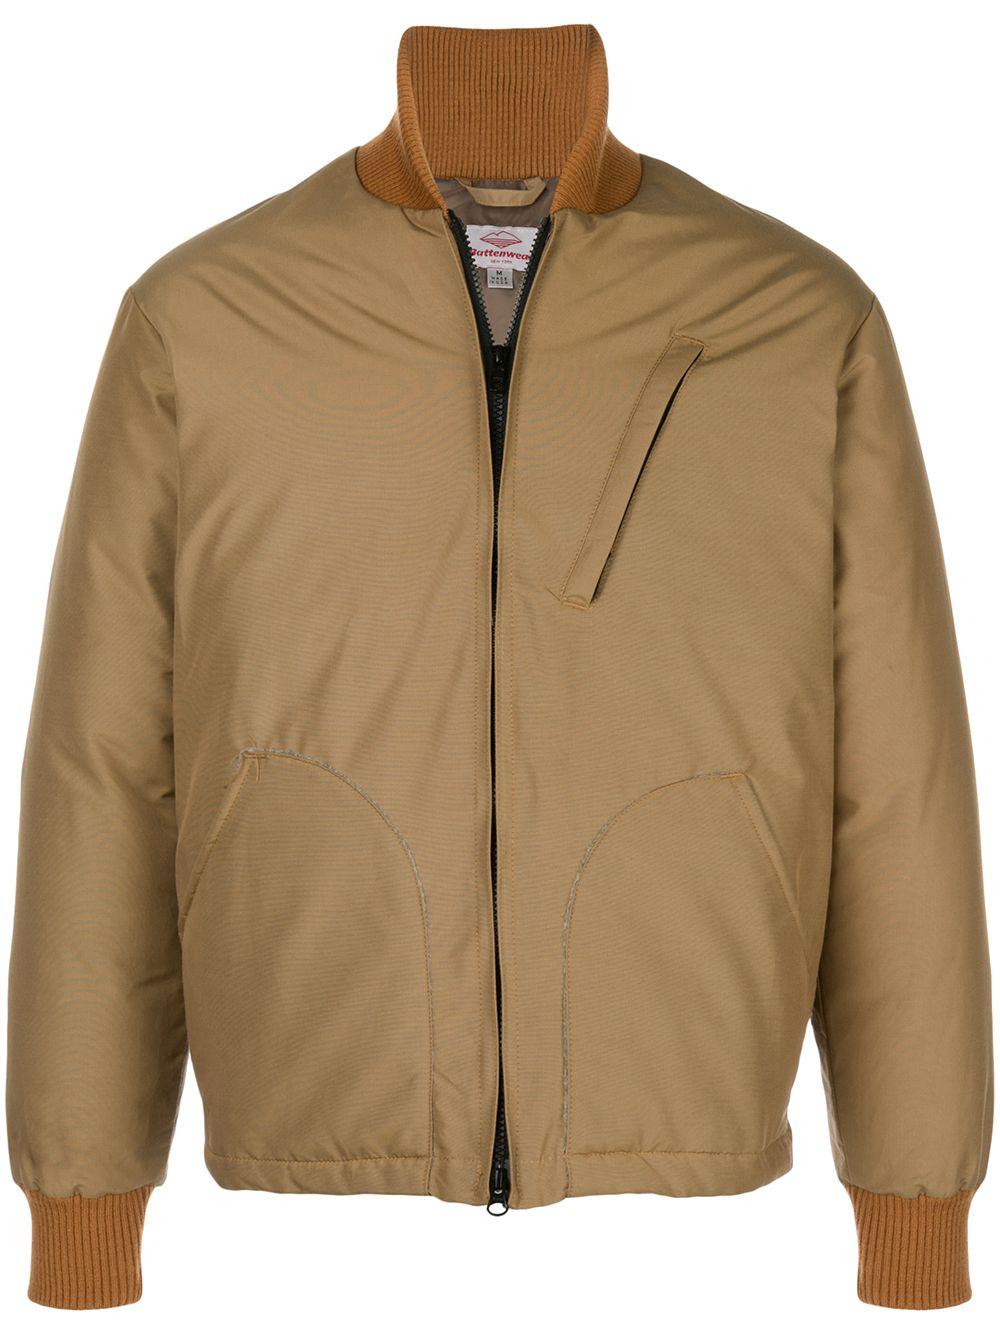 Battenwear Cotton Batten-down Deck Jacket in Natural for Men - Lyst